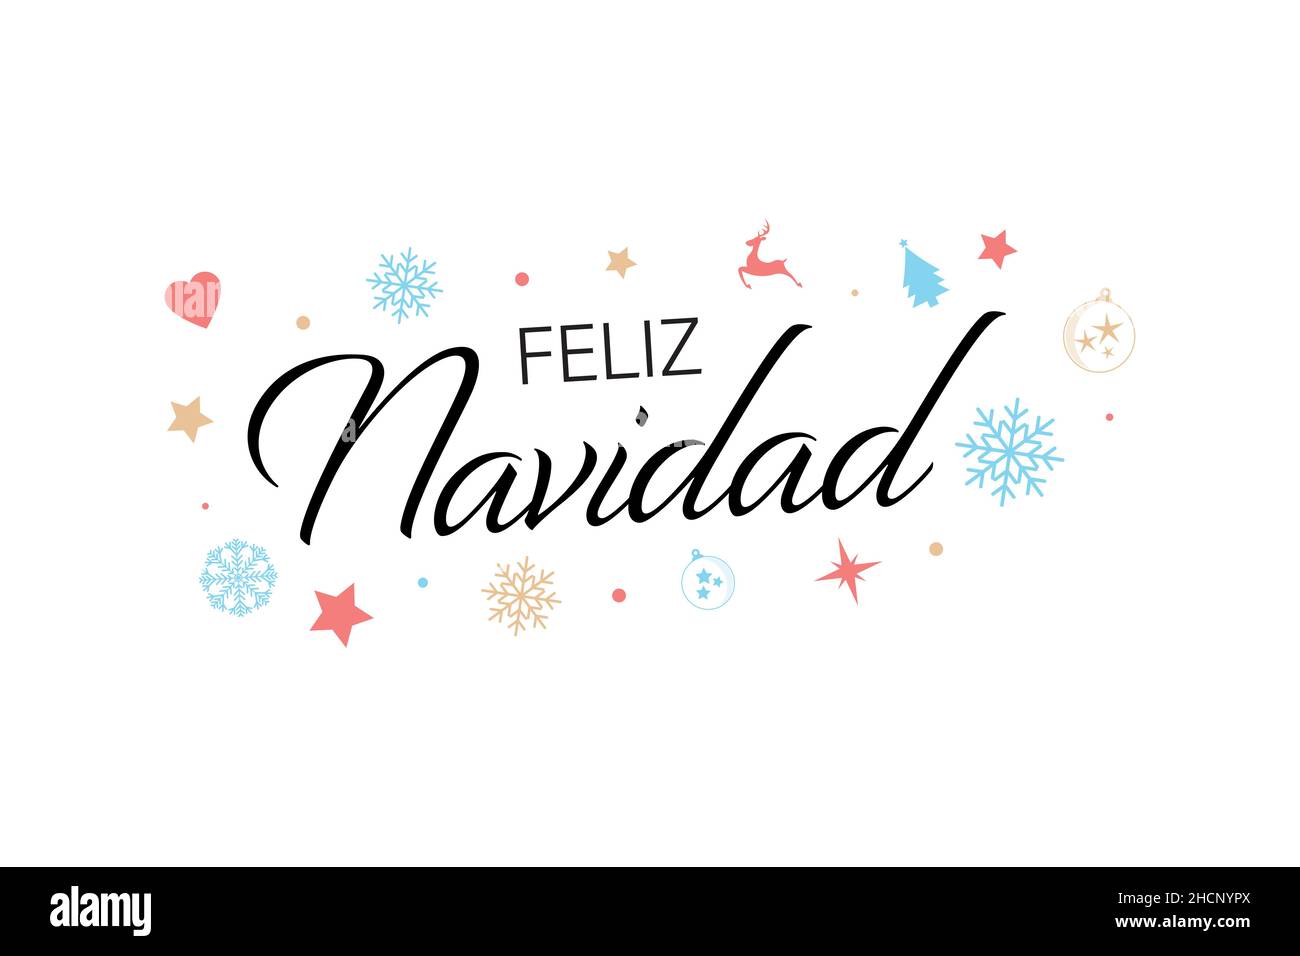 Feliz Navidad. Spanish Language. Translation: Merry Christmas. Stock Vector